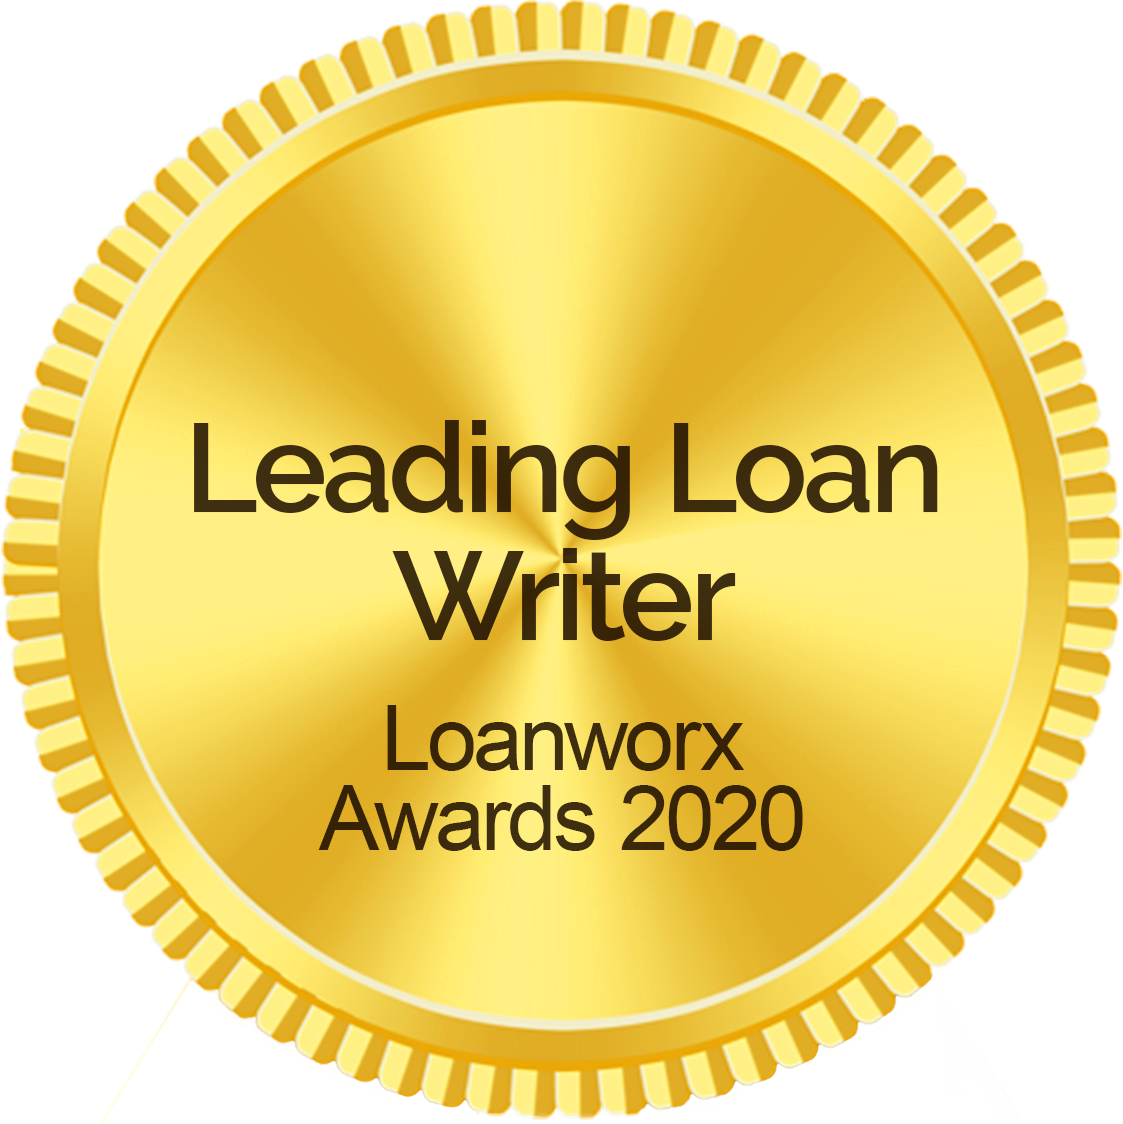 Leading Loan Writer - Loanworx Awards 2020